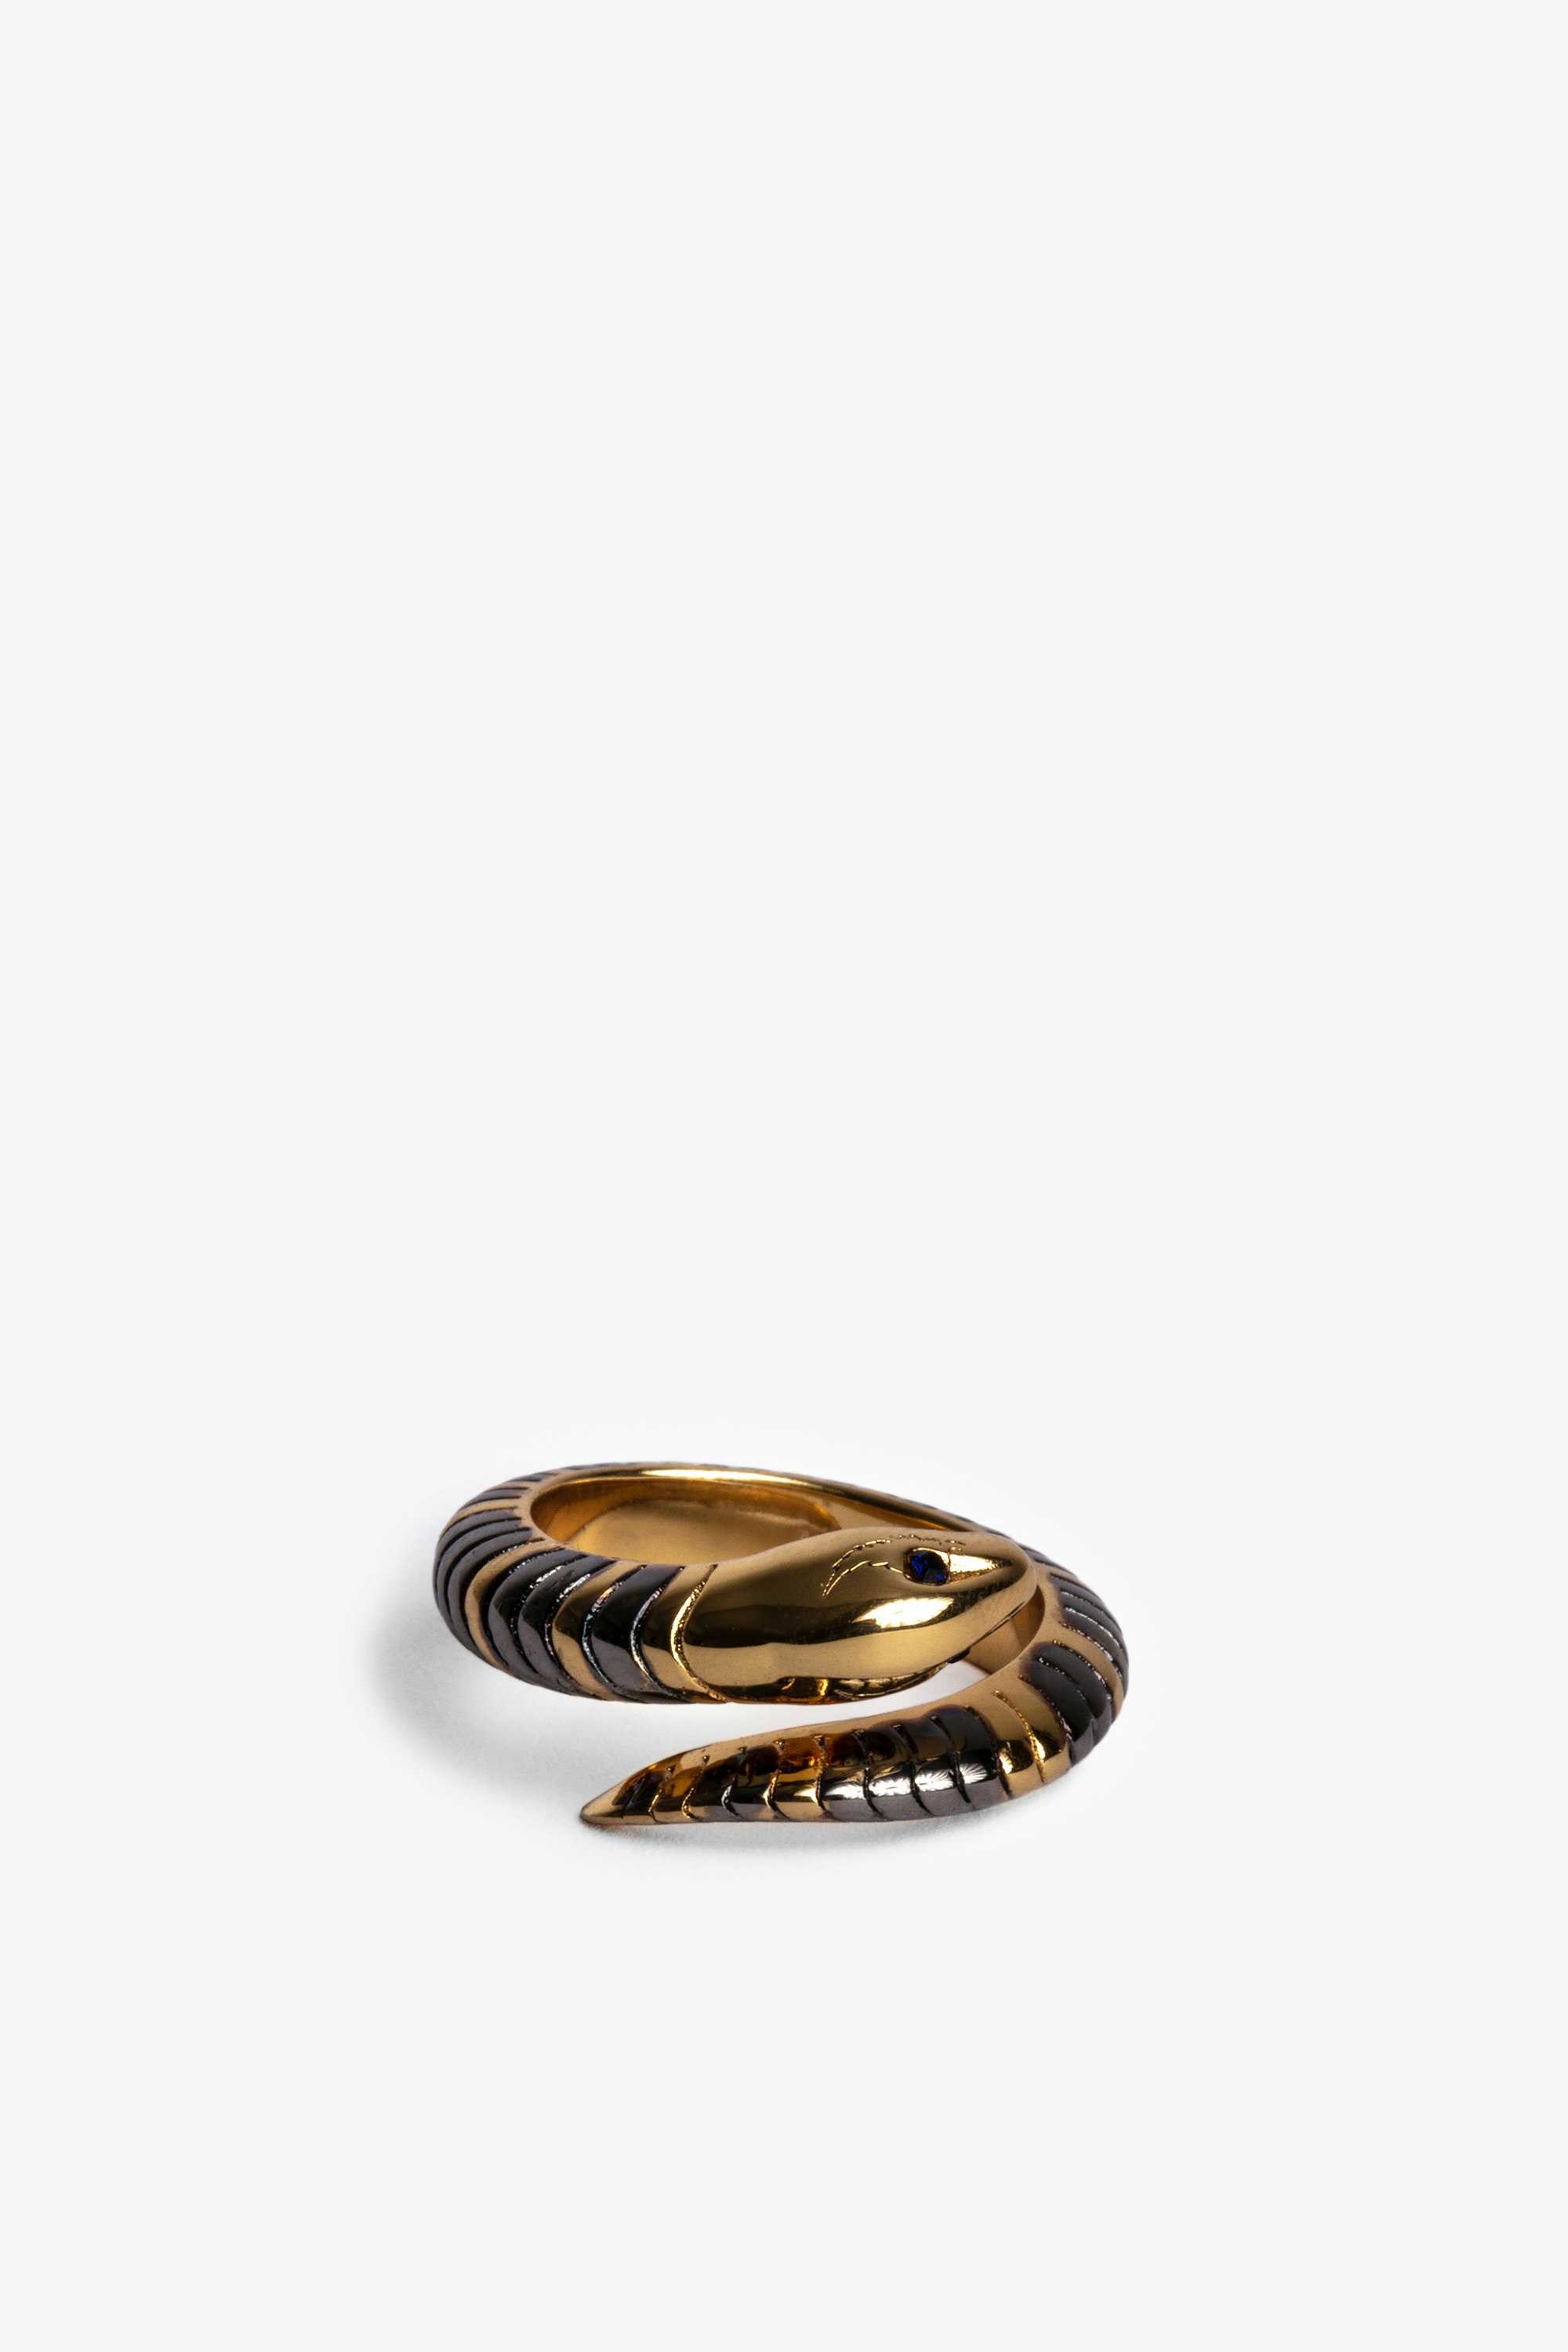 Snake 指輪 スネークリング ブラス、ゴールドプレートレディース